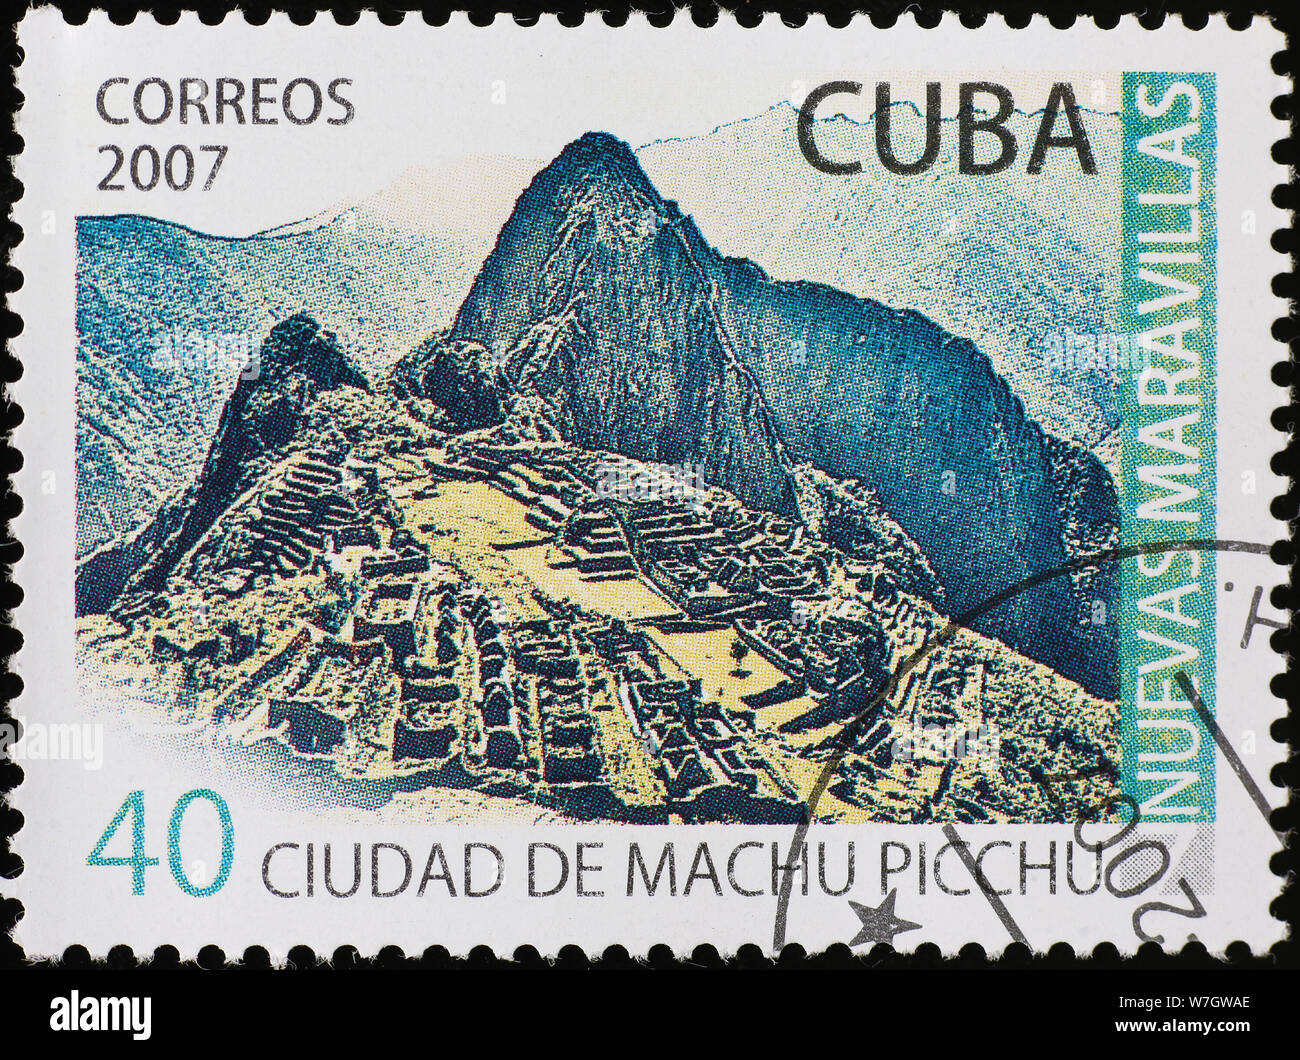 Machu Picchu on cuban postage stamp Stock Photo